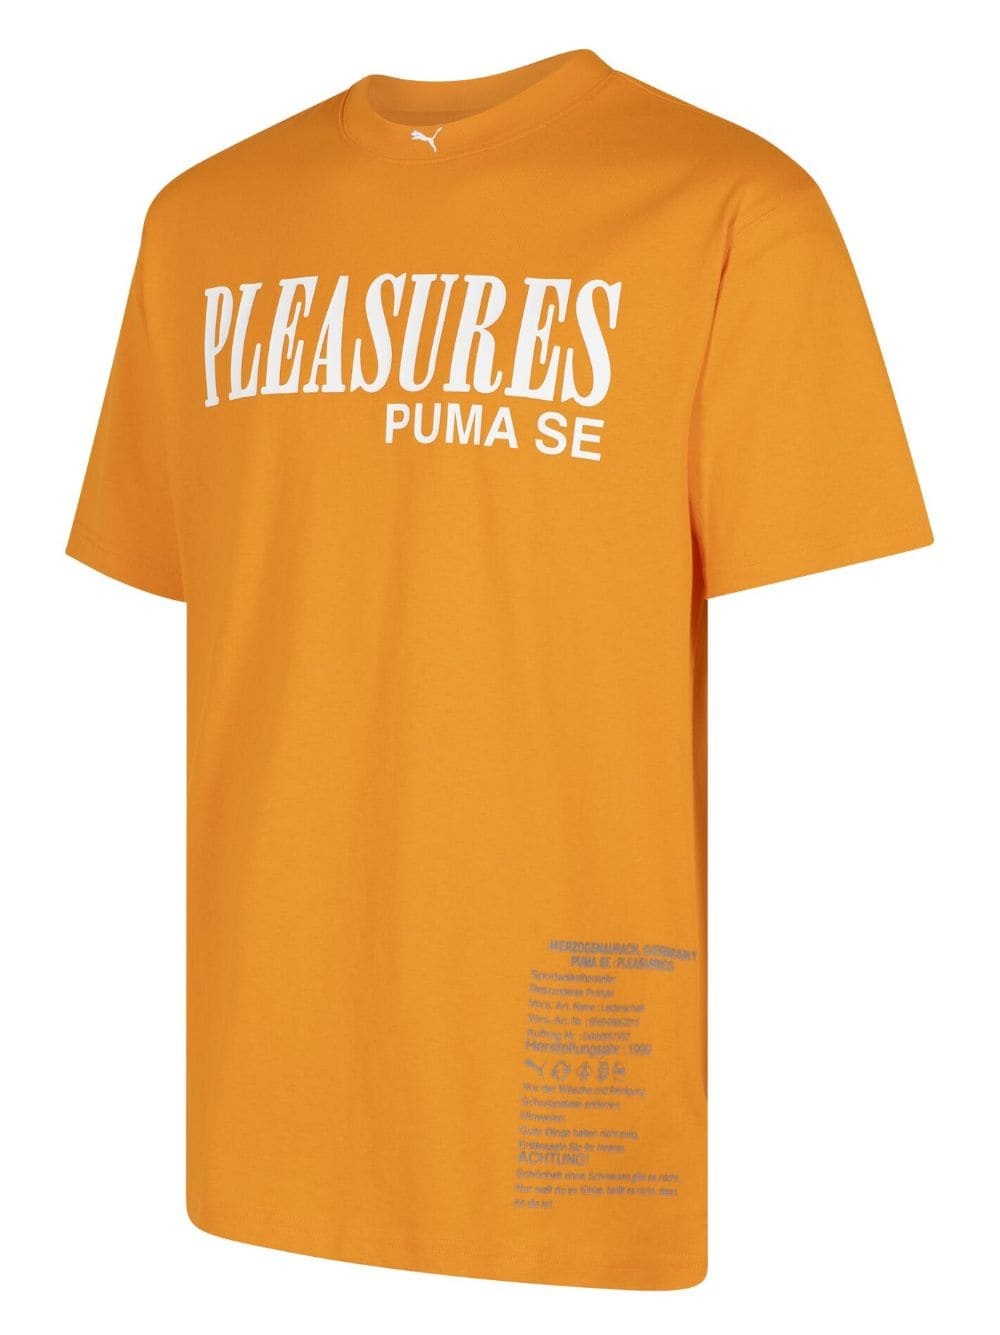 x Pleasures Typo cotton T-shirt - 2